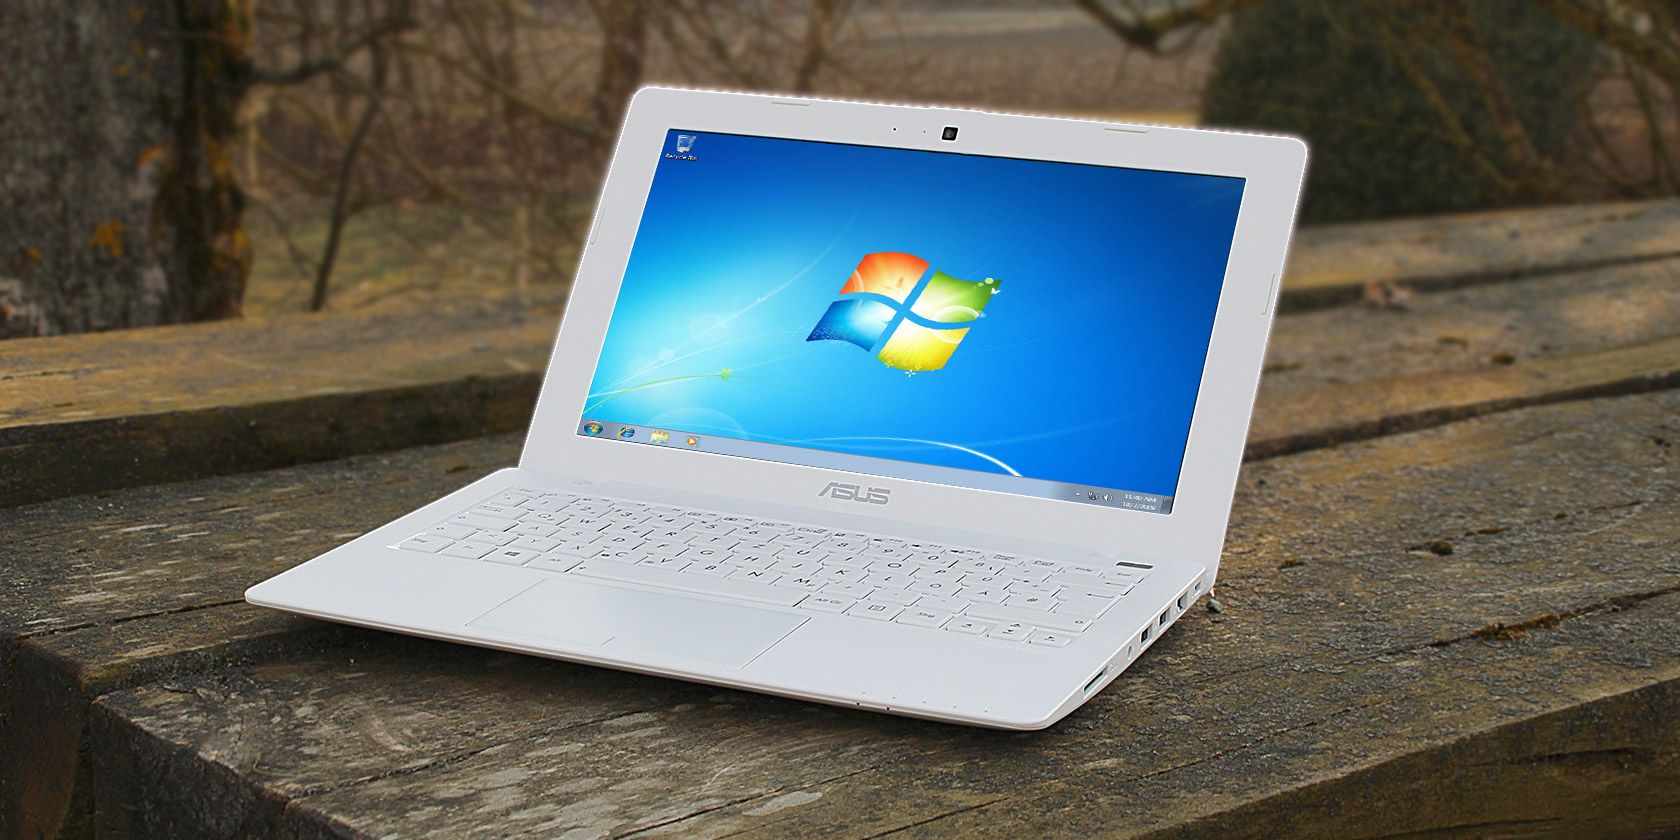 Windows 7 Professional Laptops Get Now